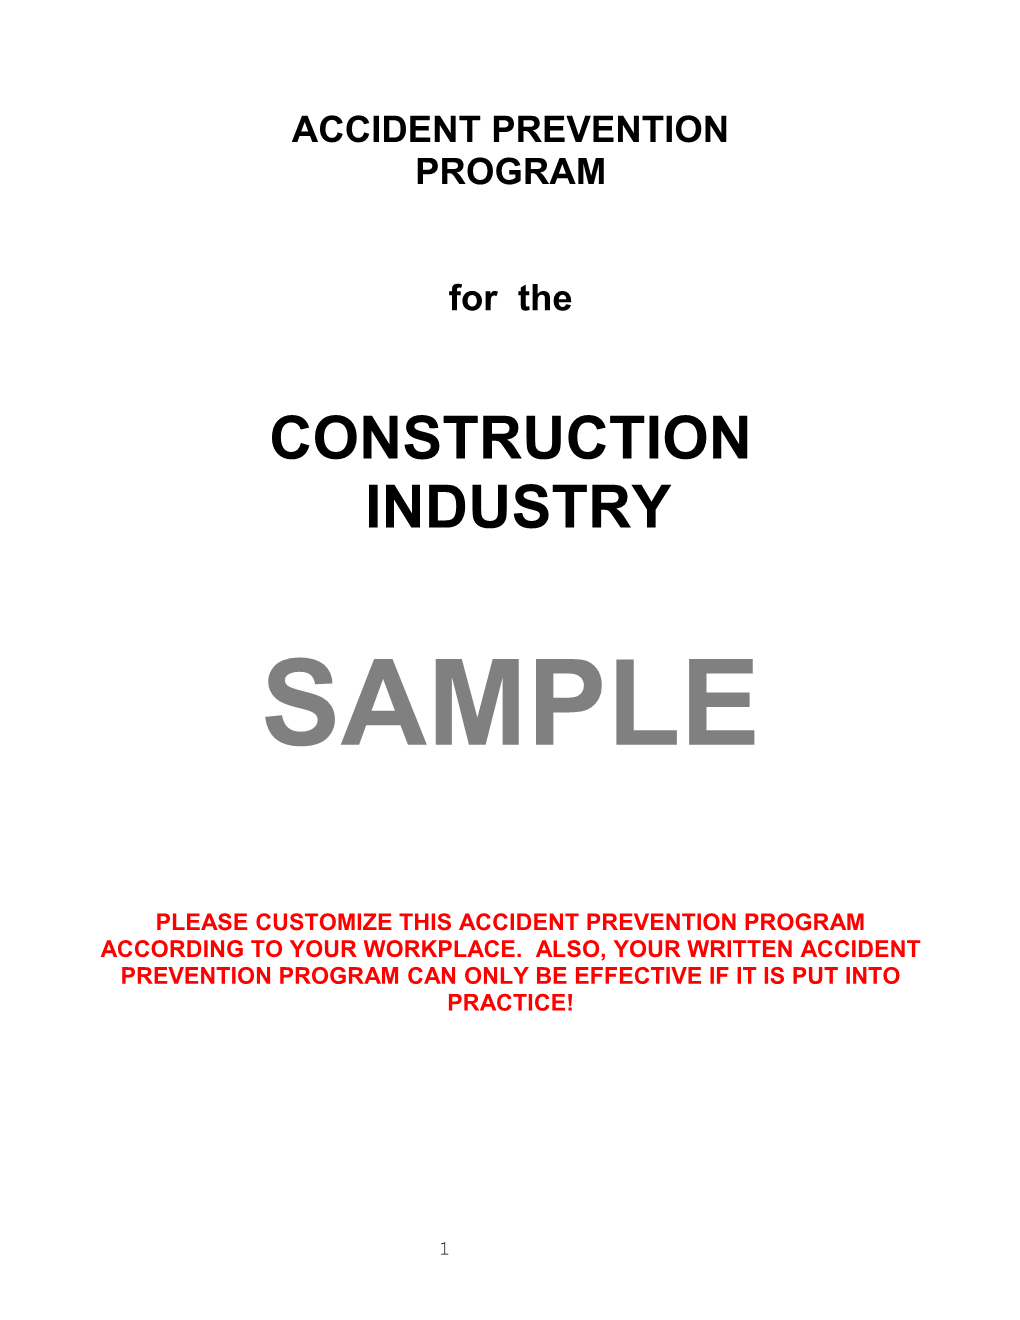 Sample Accident Prevention Program (APP) for Construction